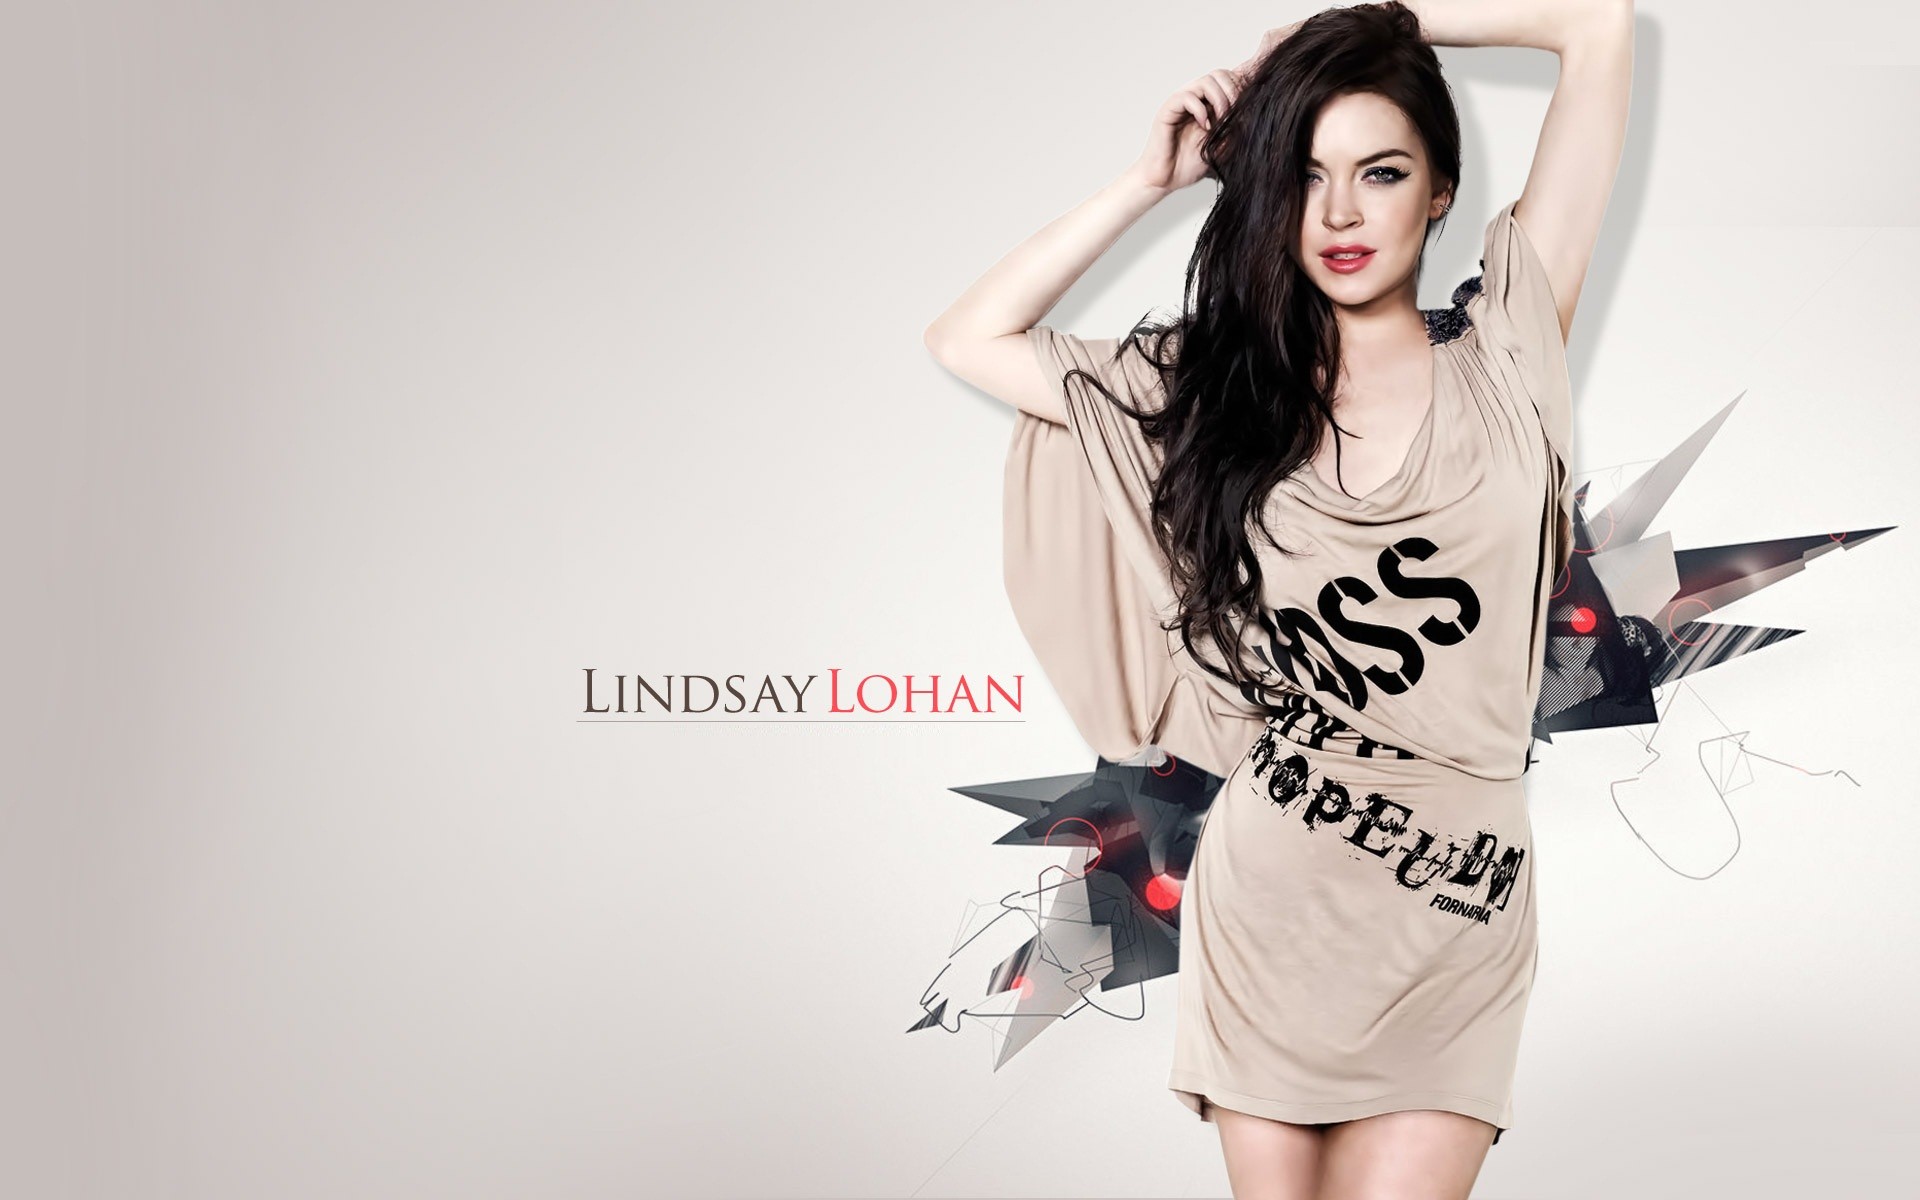 Lindsay Lohan Pronunciation